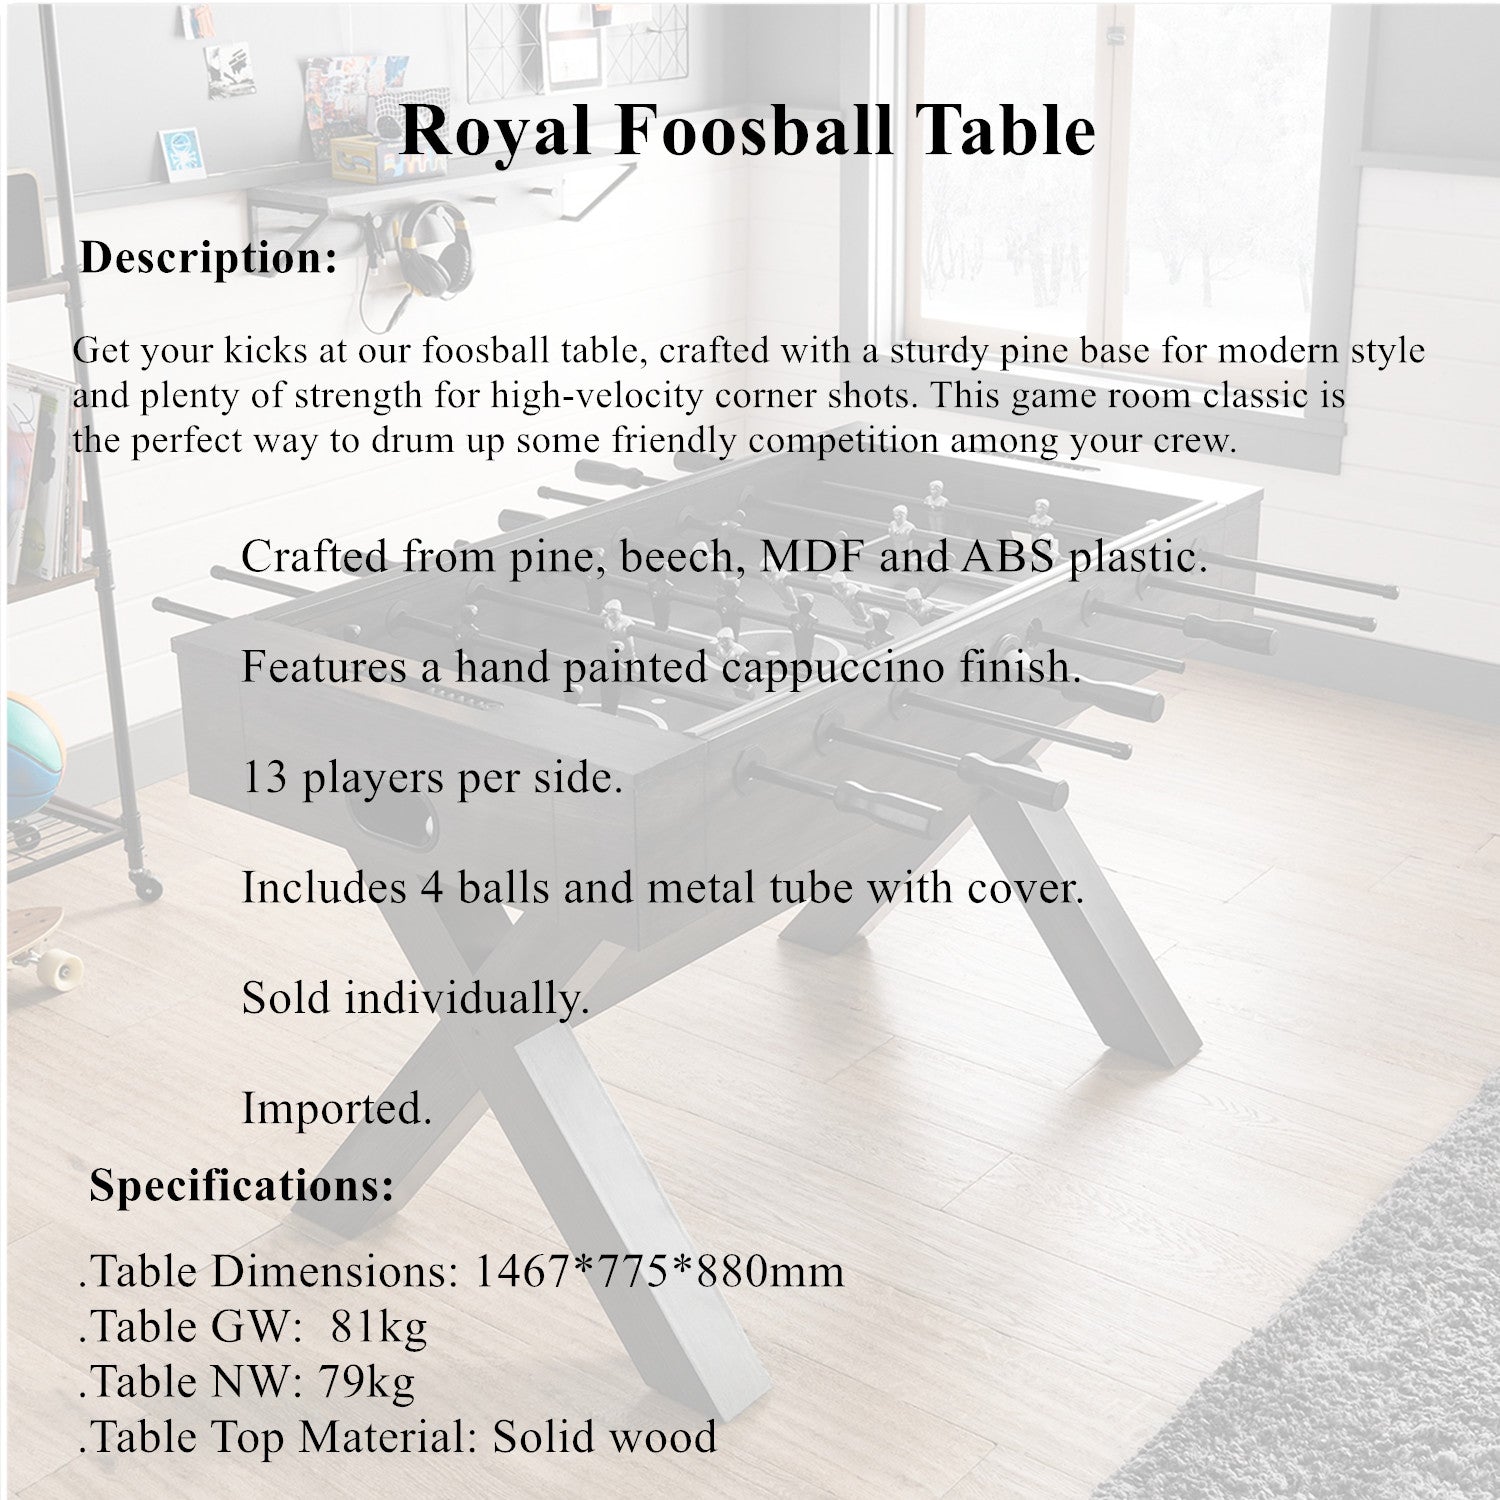 5FT Royal Foosball Table-Solid Wood